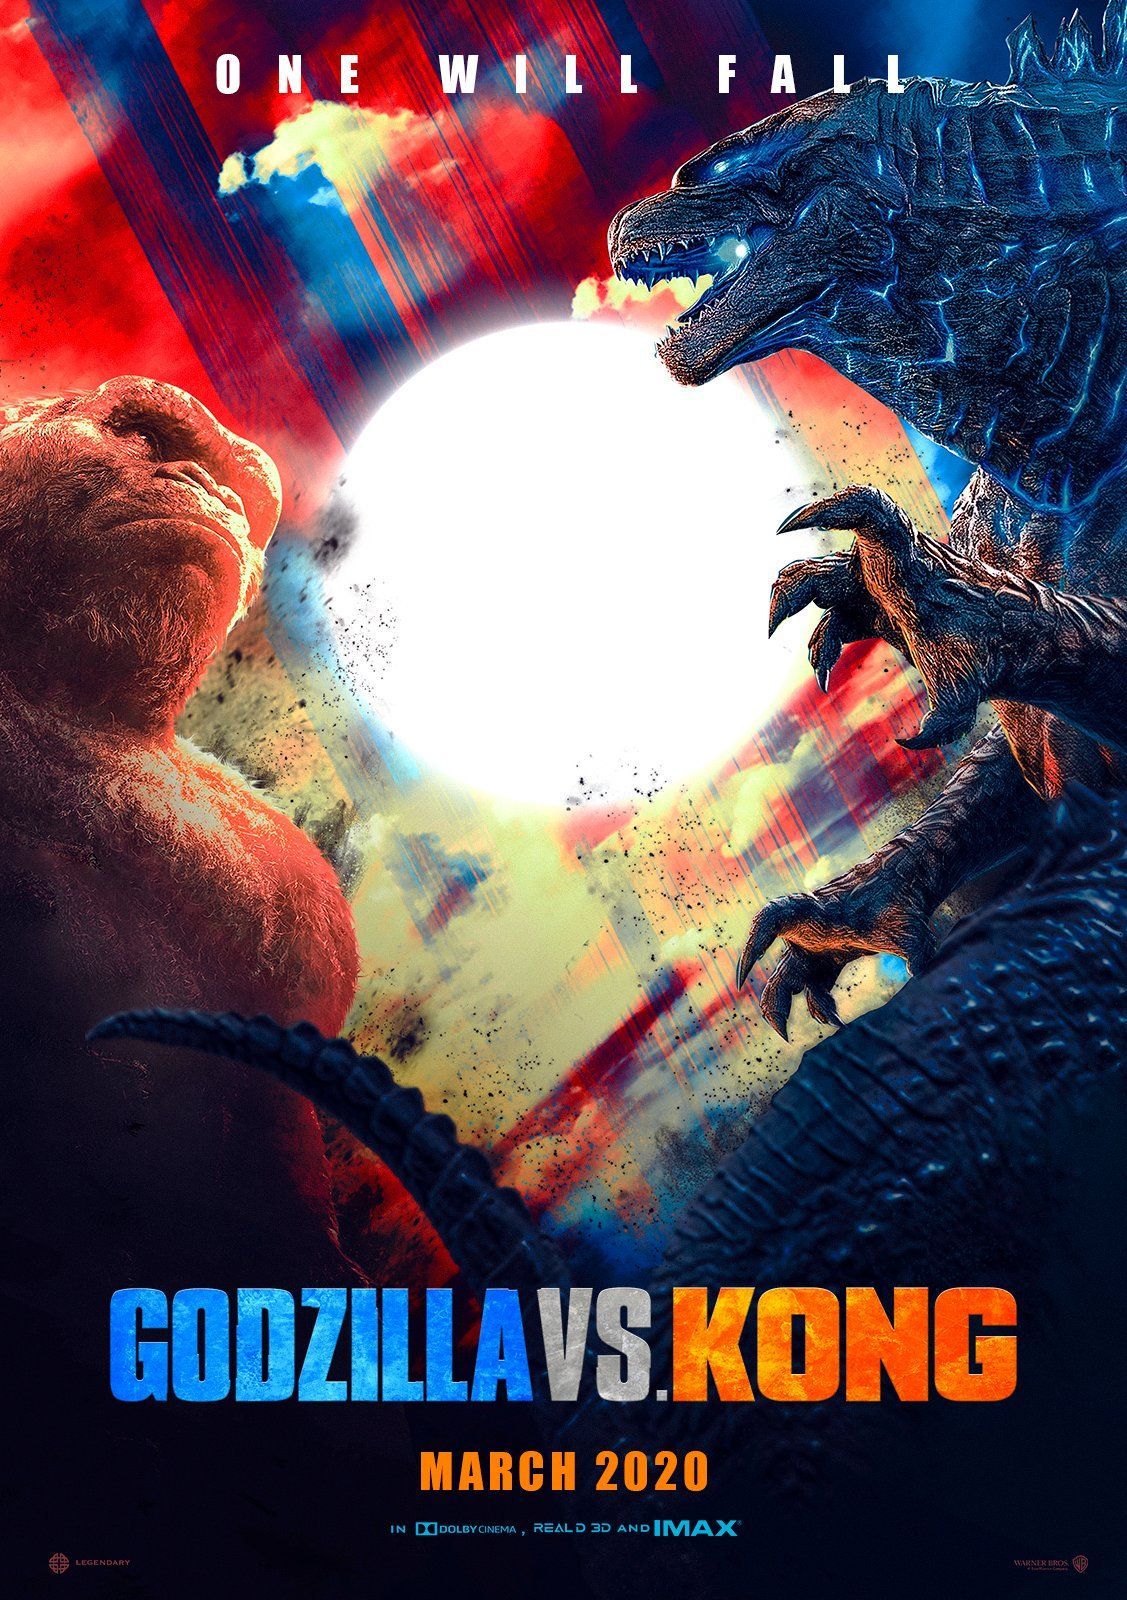 Twitter. King kong vs godzilla, Godzilla vs, Godzilla